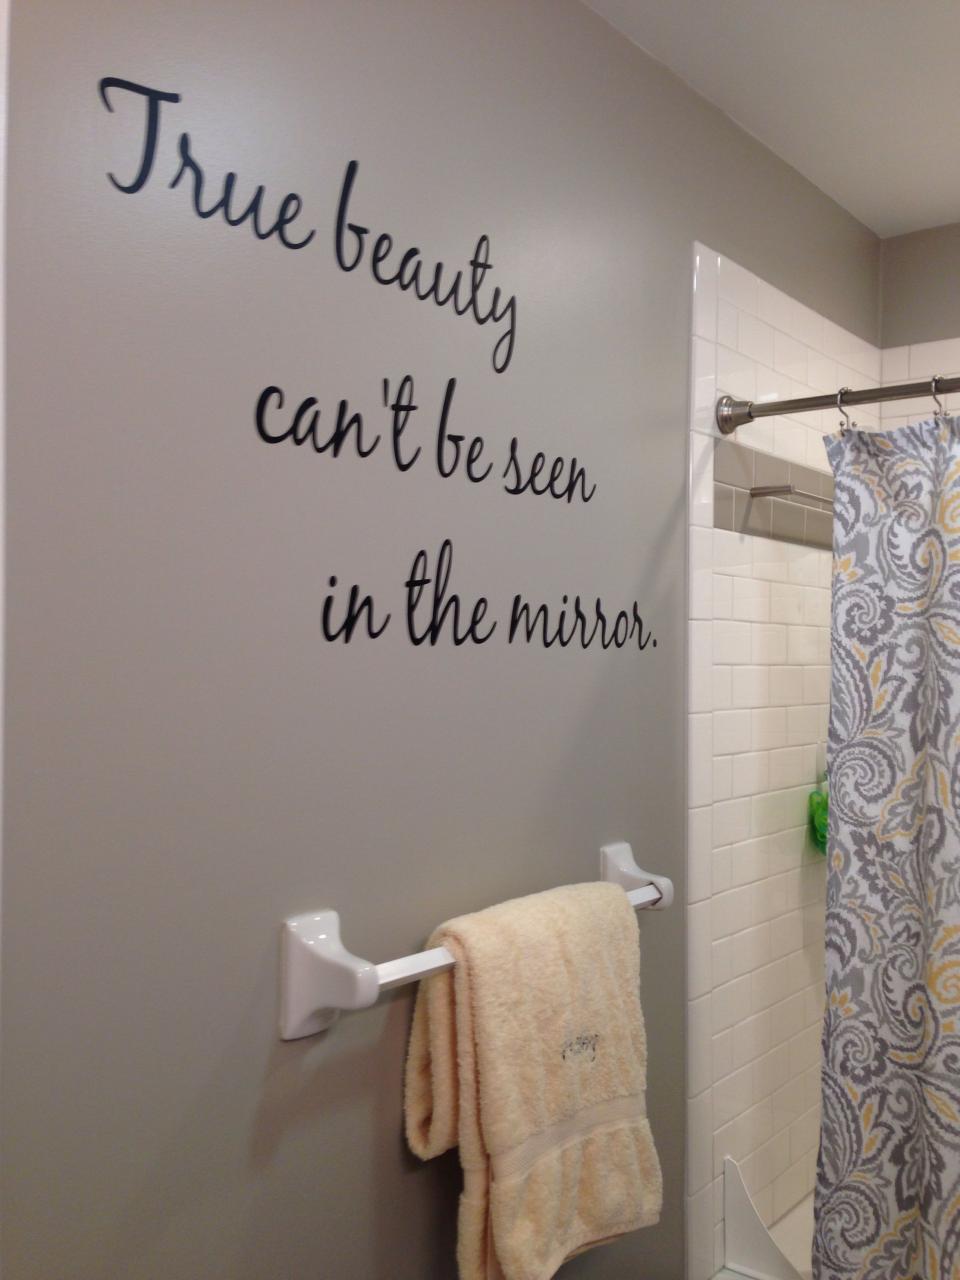 Girls bathroom wall quote Bathroom quotes decor, Bathroom wall quotes